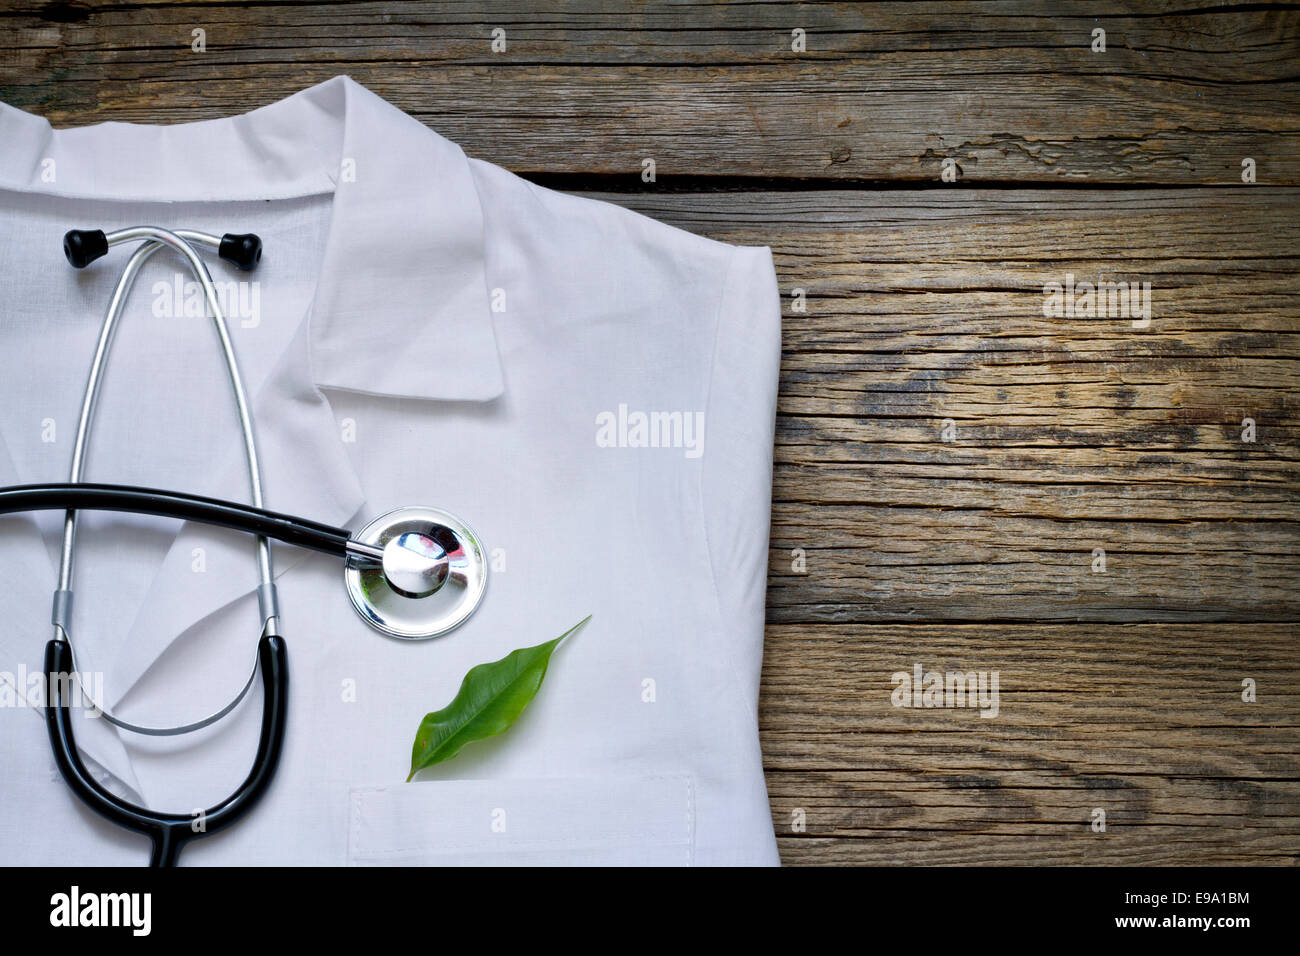 Alternative medicine stethoscope and green symbol background concept Stock Photo